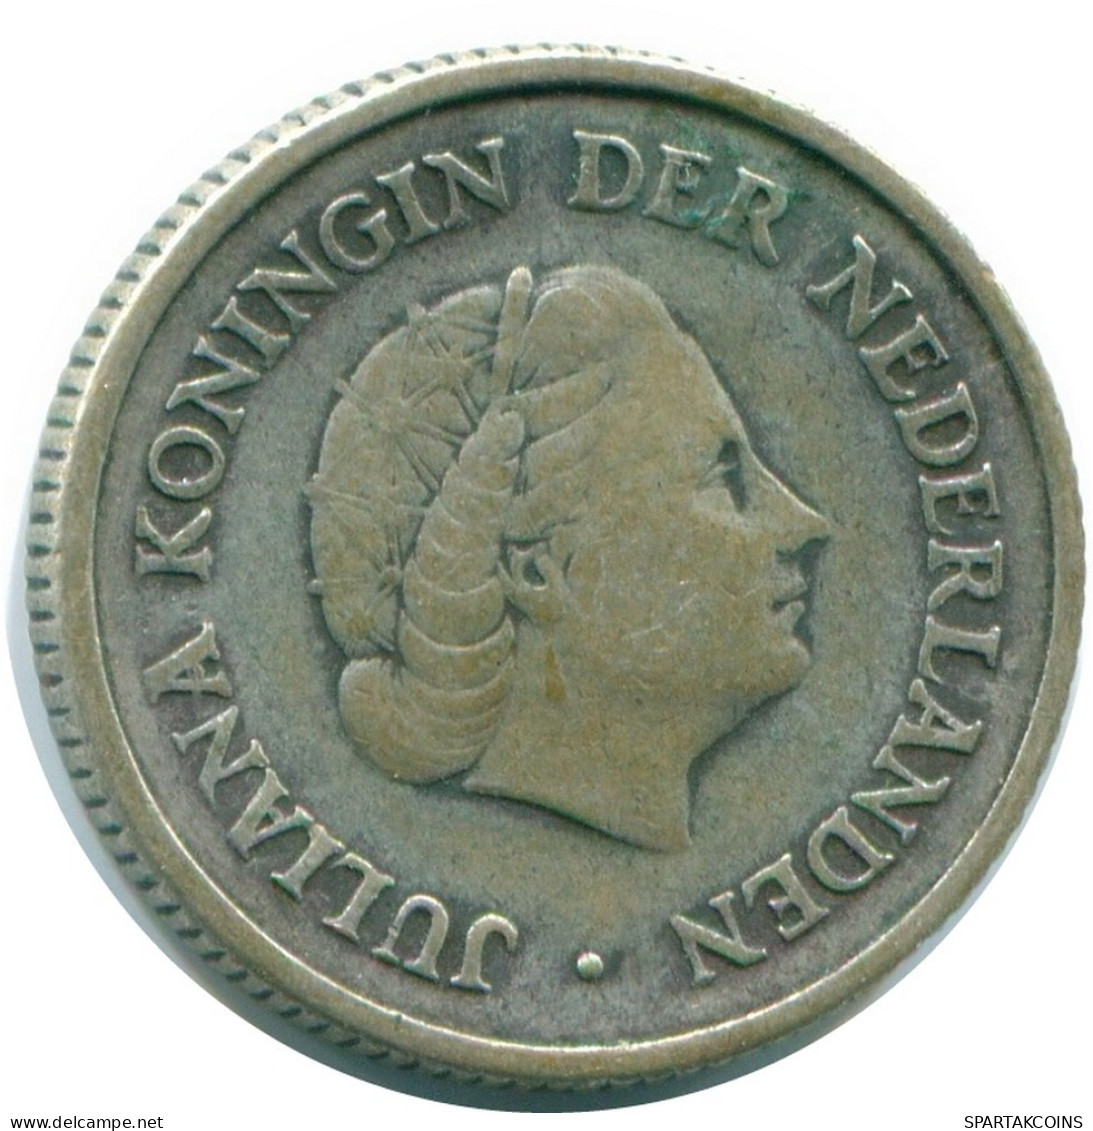 1/4 GULDEN 1954 NETHERLANDS ANTILLES SILVER Colonial Coin #NL10882.4.U.A - Netherlands Antilles